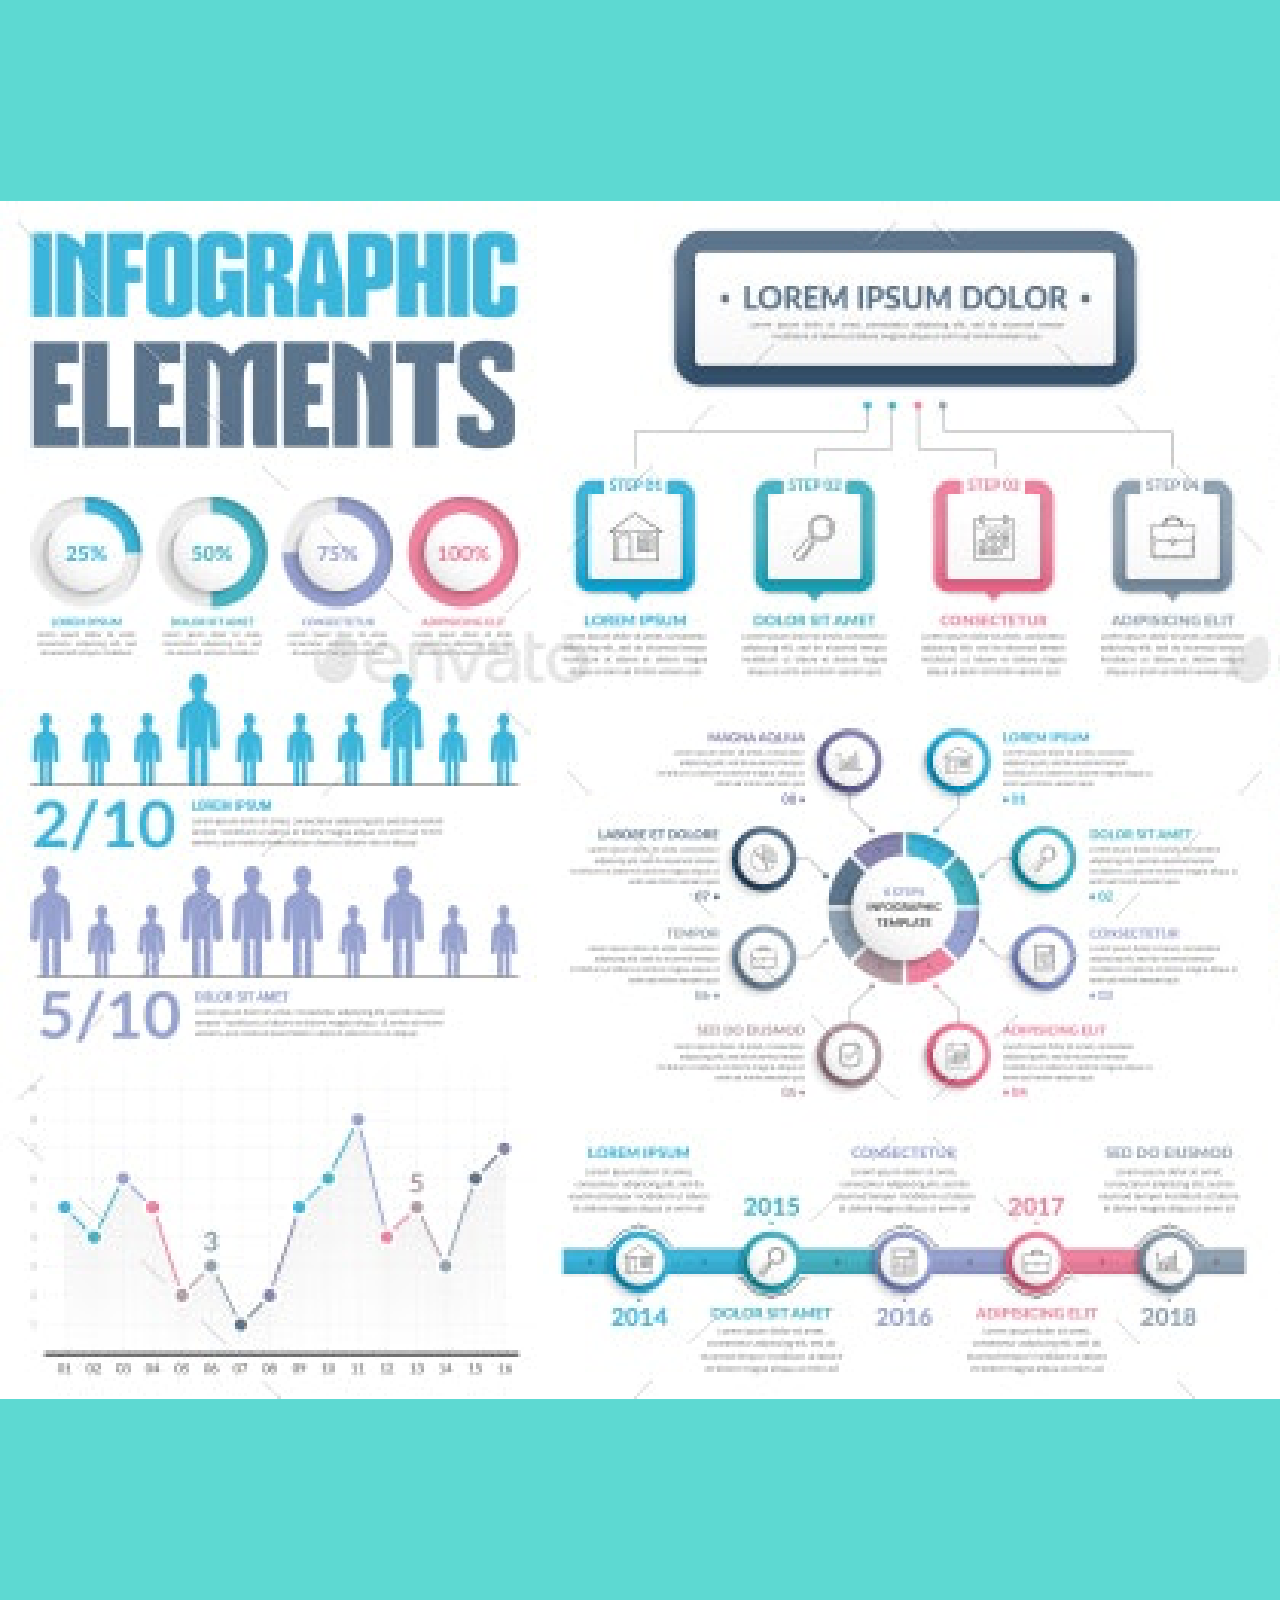 Infographic elements pinterest image.